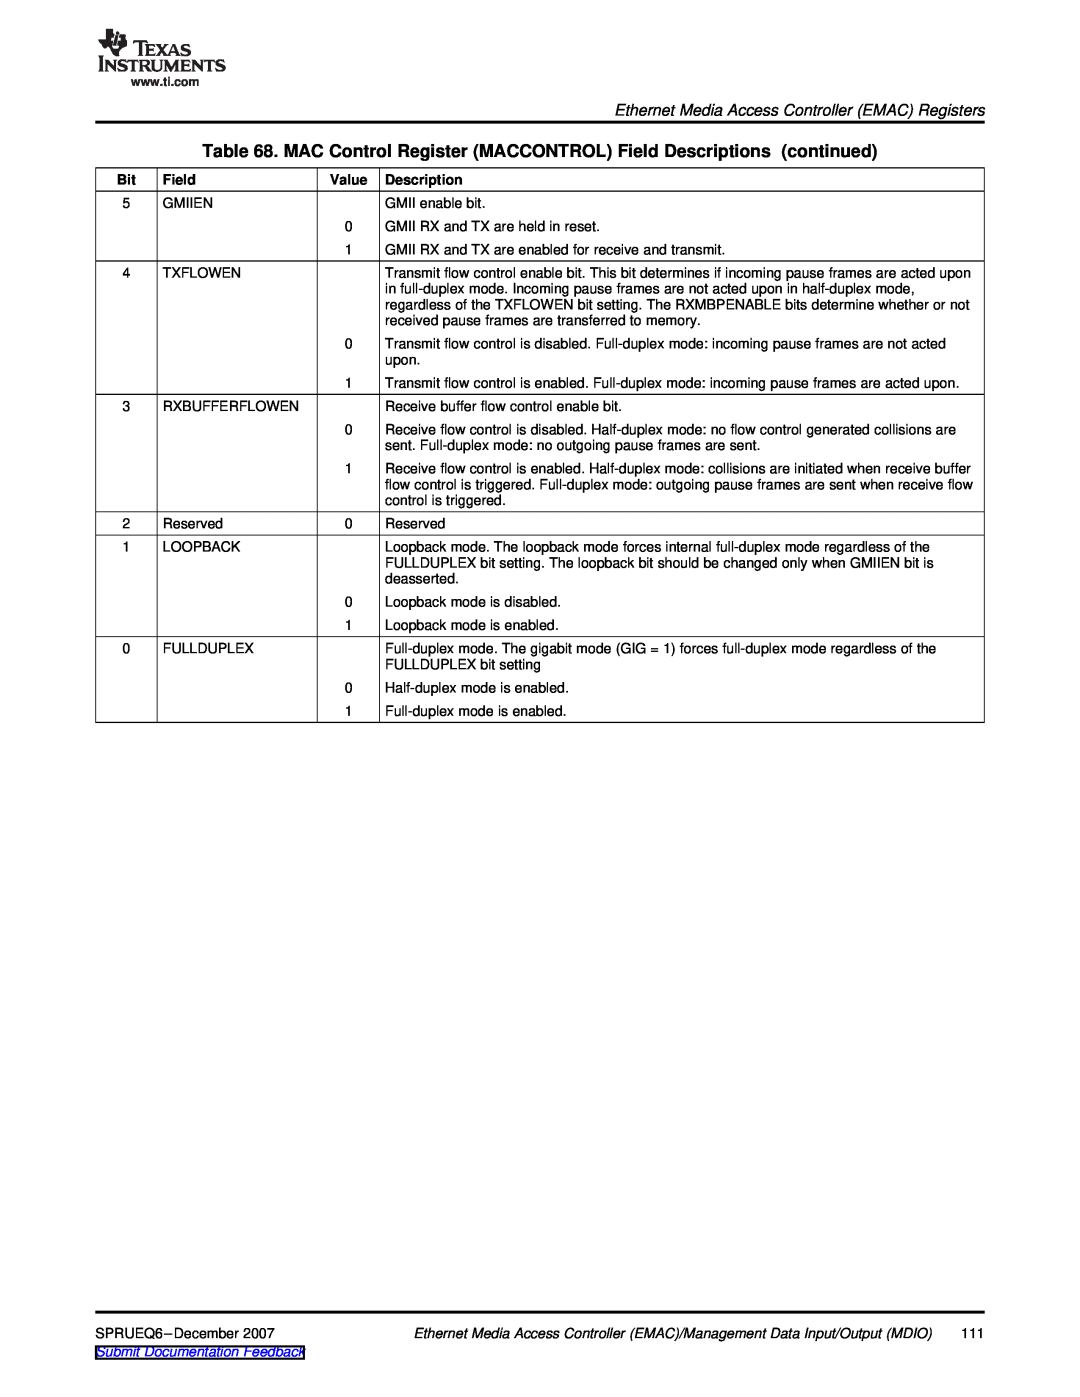 Texas Instruments TMS320DM646x manual Field, Description, Submit Documentation Feedback, Value 